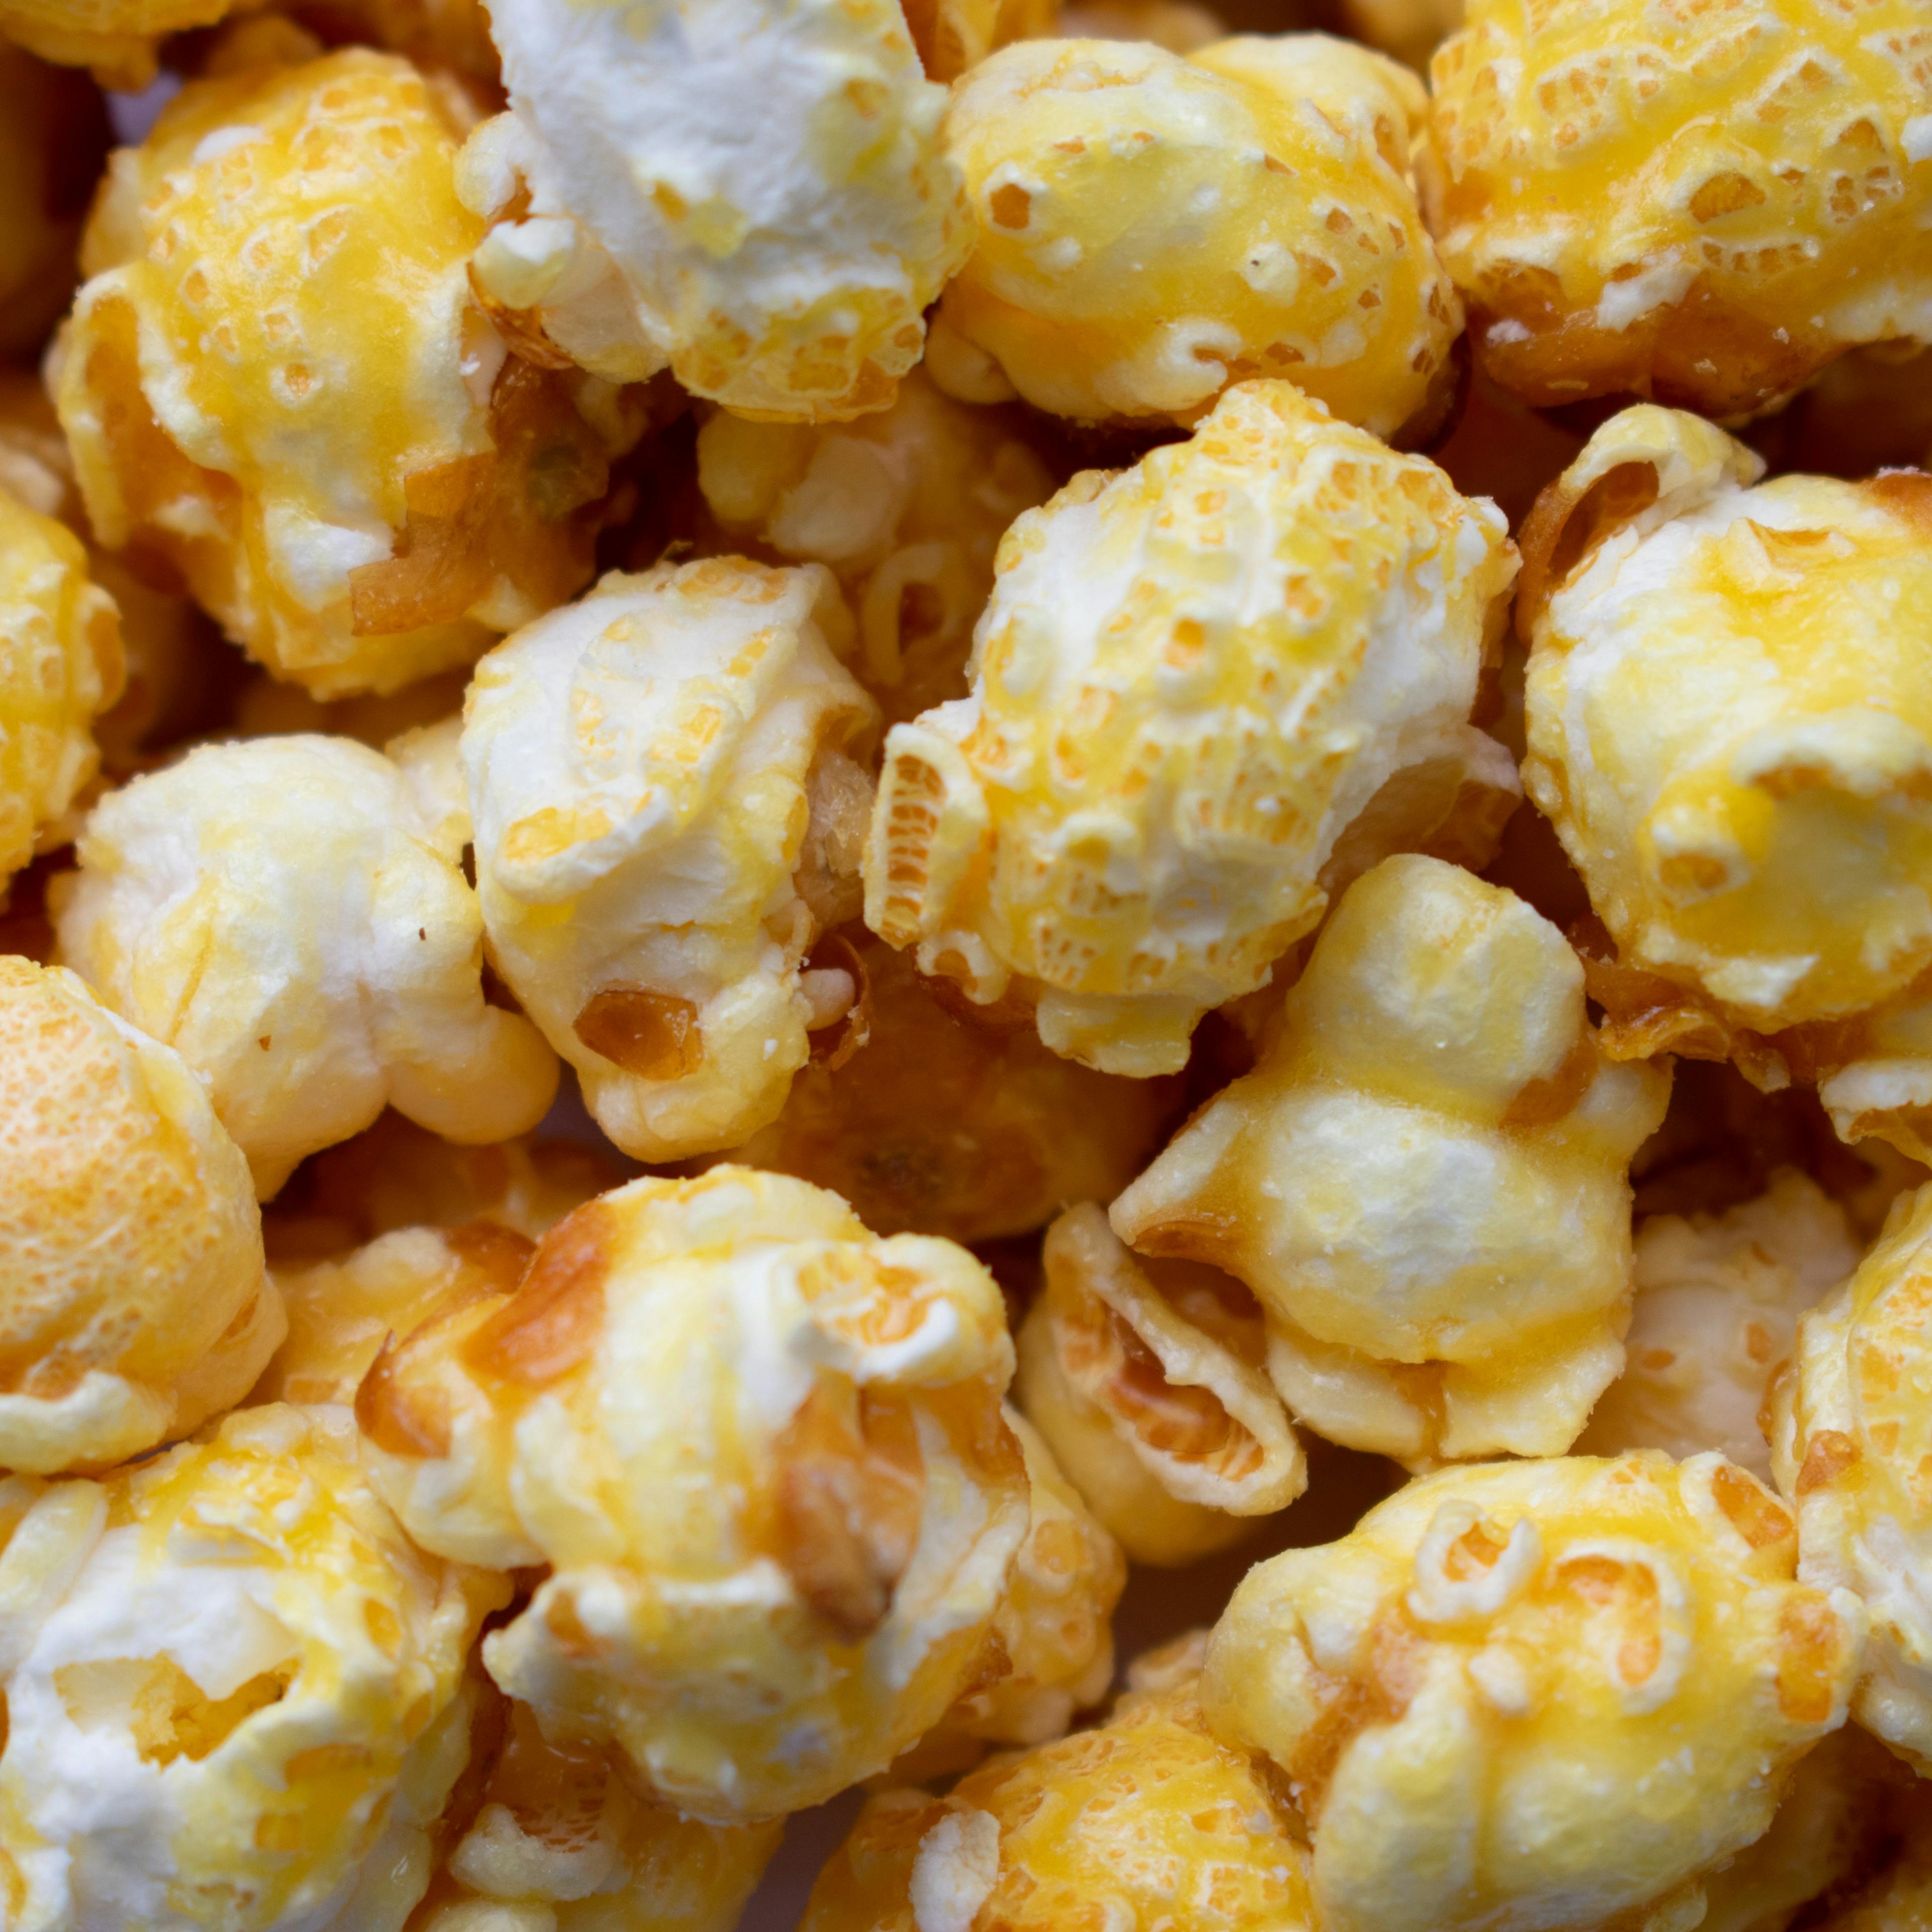 'You Deserve It' | Vegan Gourmet Popcorn | Letterbox Gift | Trio of Flavours | 240g